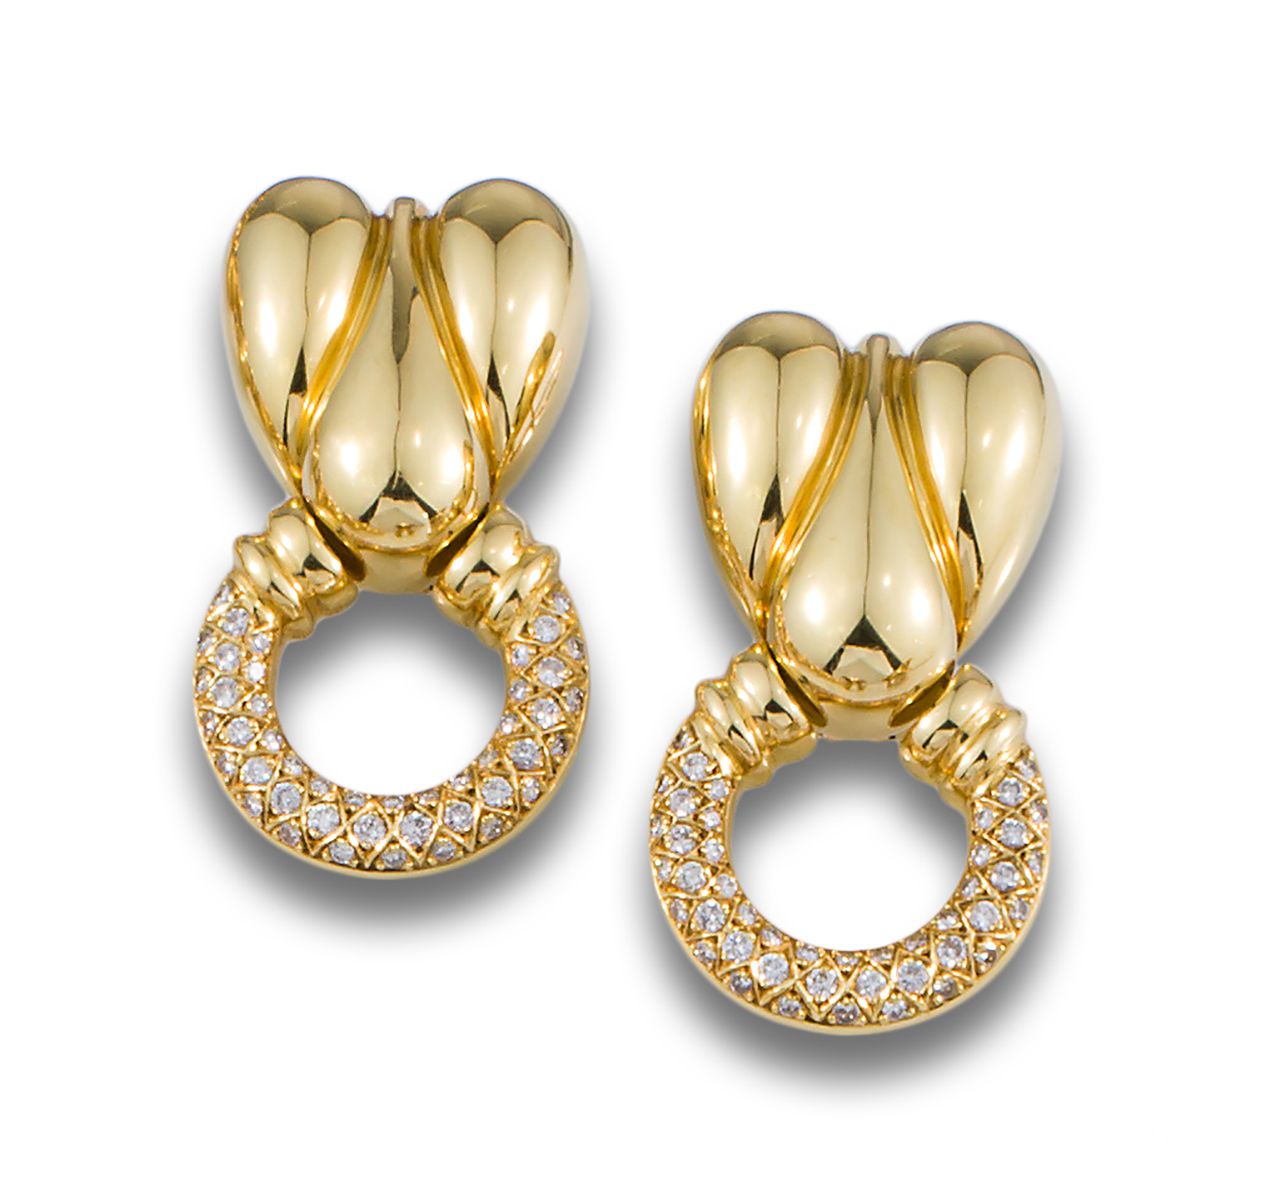 GOLD HOOP EARRINGS BOMBE DIAMONDS 18K黄金长耳环，上半部分有bombé图案，戒指上有明亮式切割钻石 .